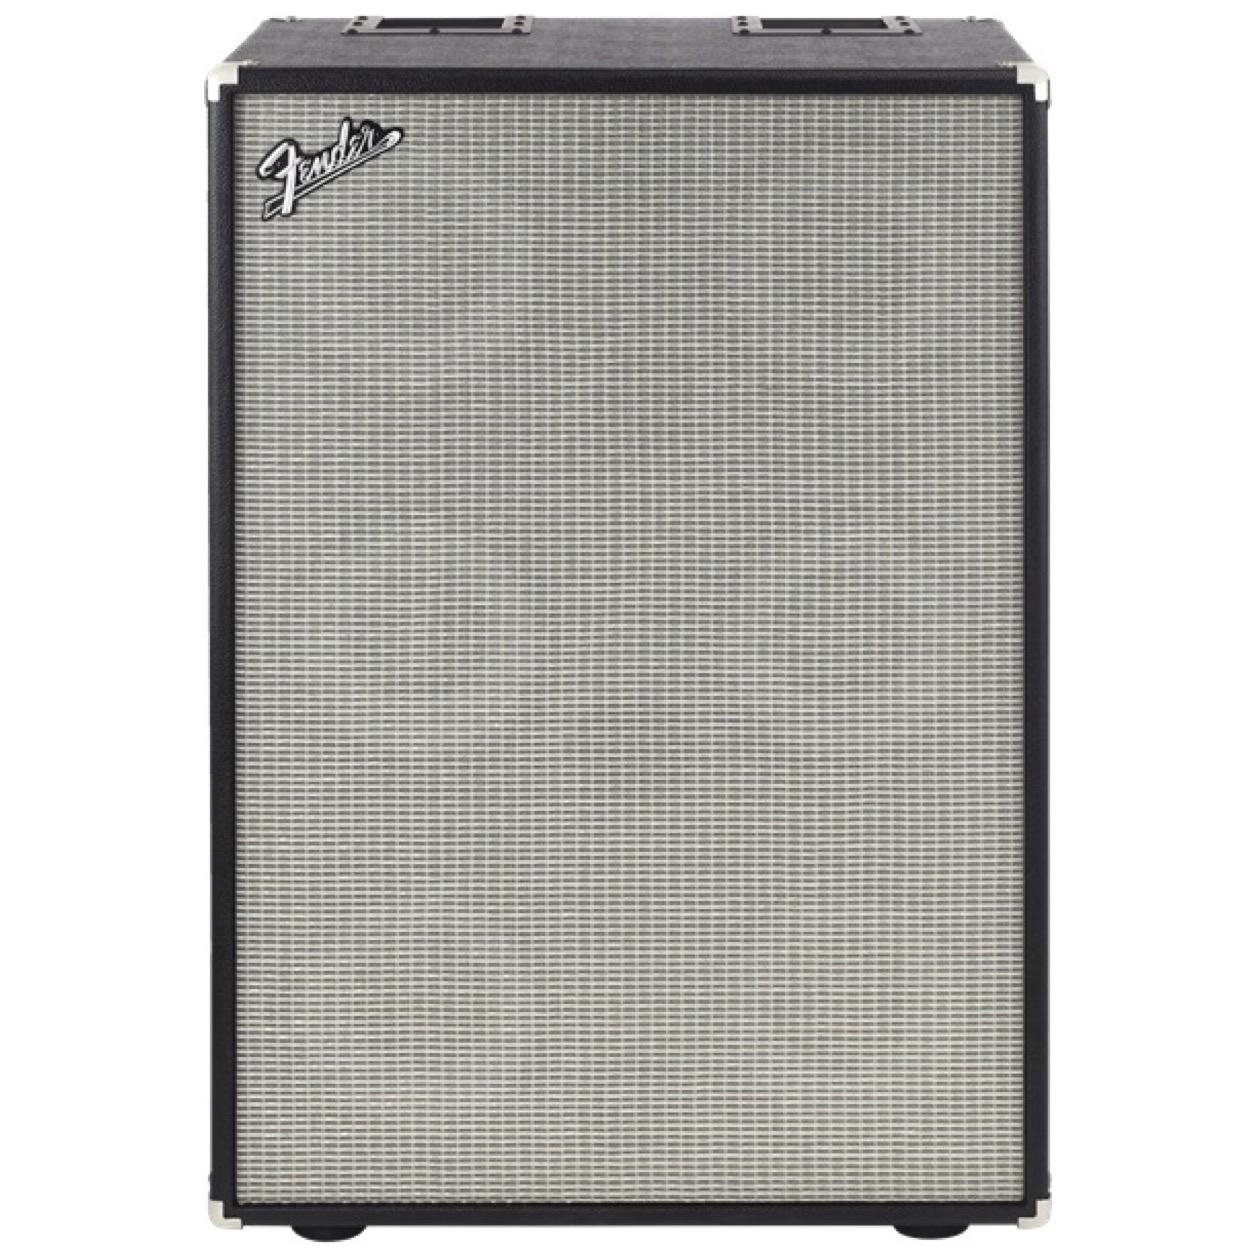 Fender Bassman 610 Neo, Black/Silver 800 watts 6 x 10” Fender Special Design Eminence® U.S.A Speaker Enclosure